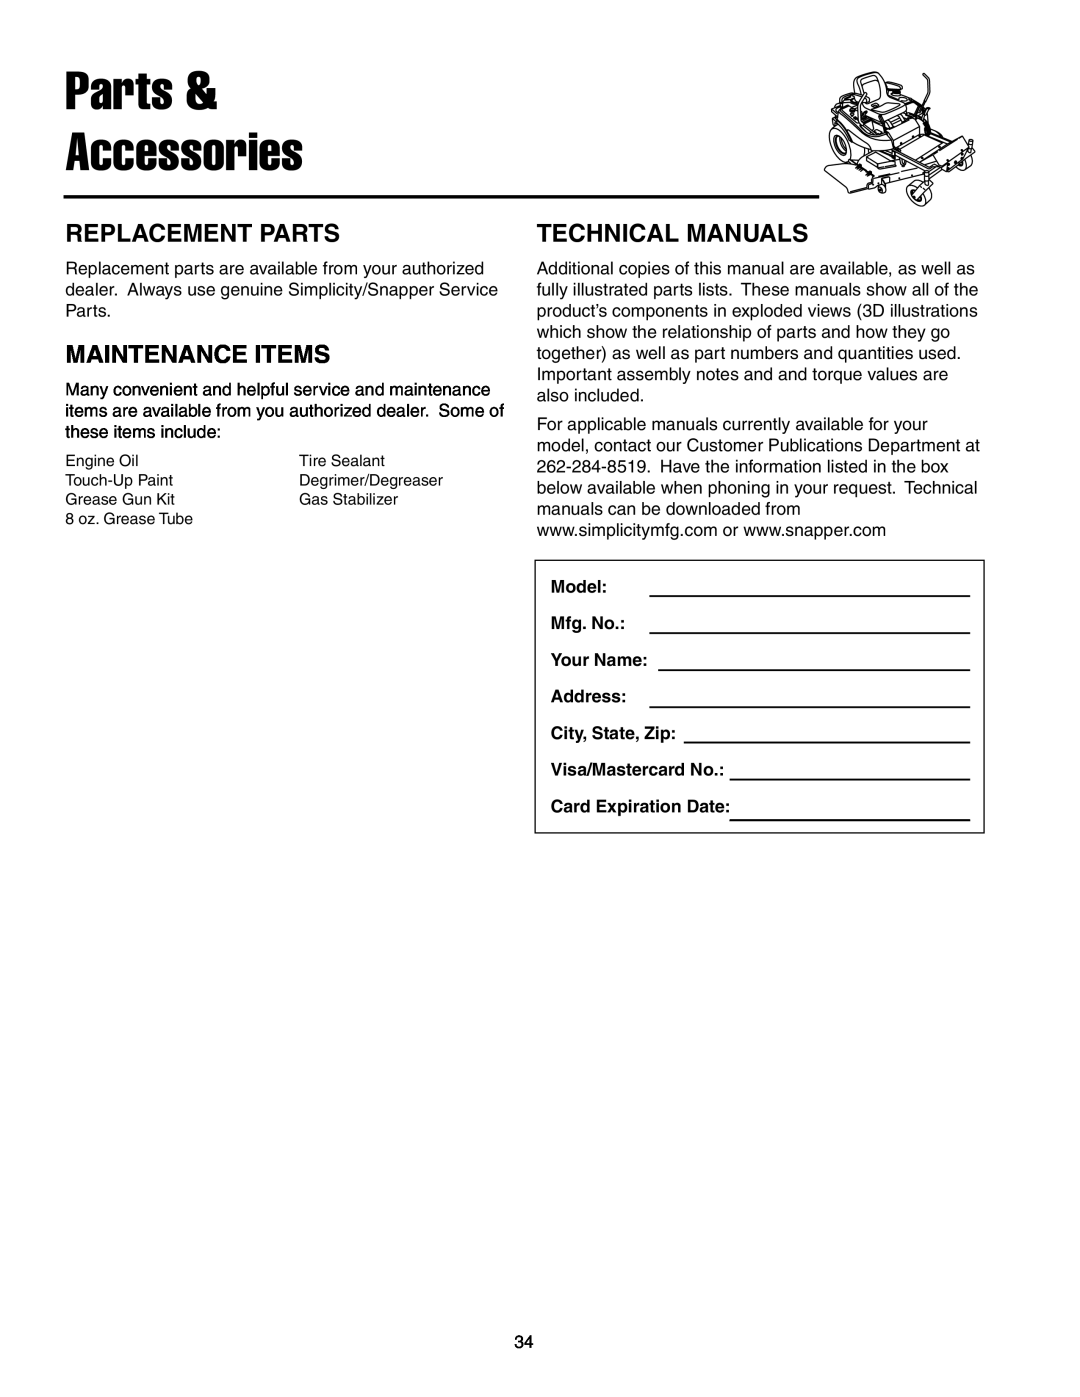 Snapper ERZT20441BVE2 manual Replacement Parts, Maintenance Items, Technical Manuals, Parts & Accessories 